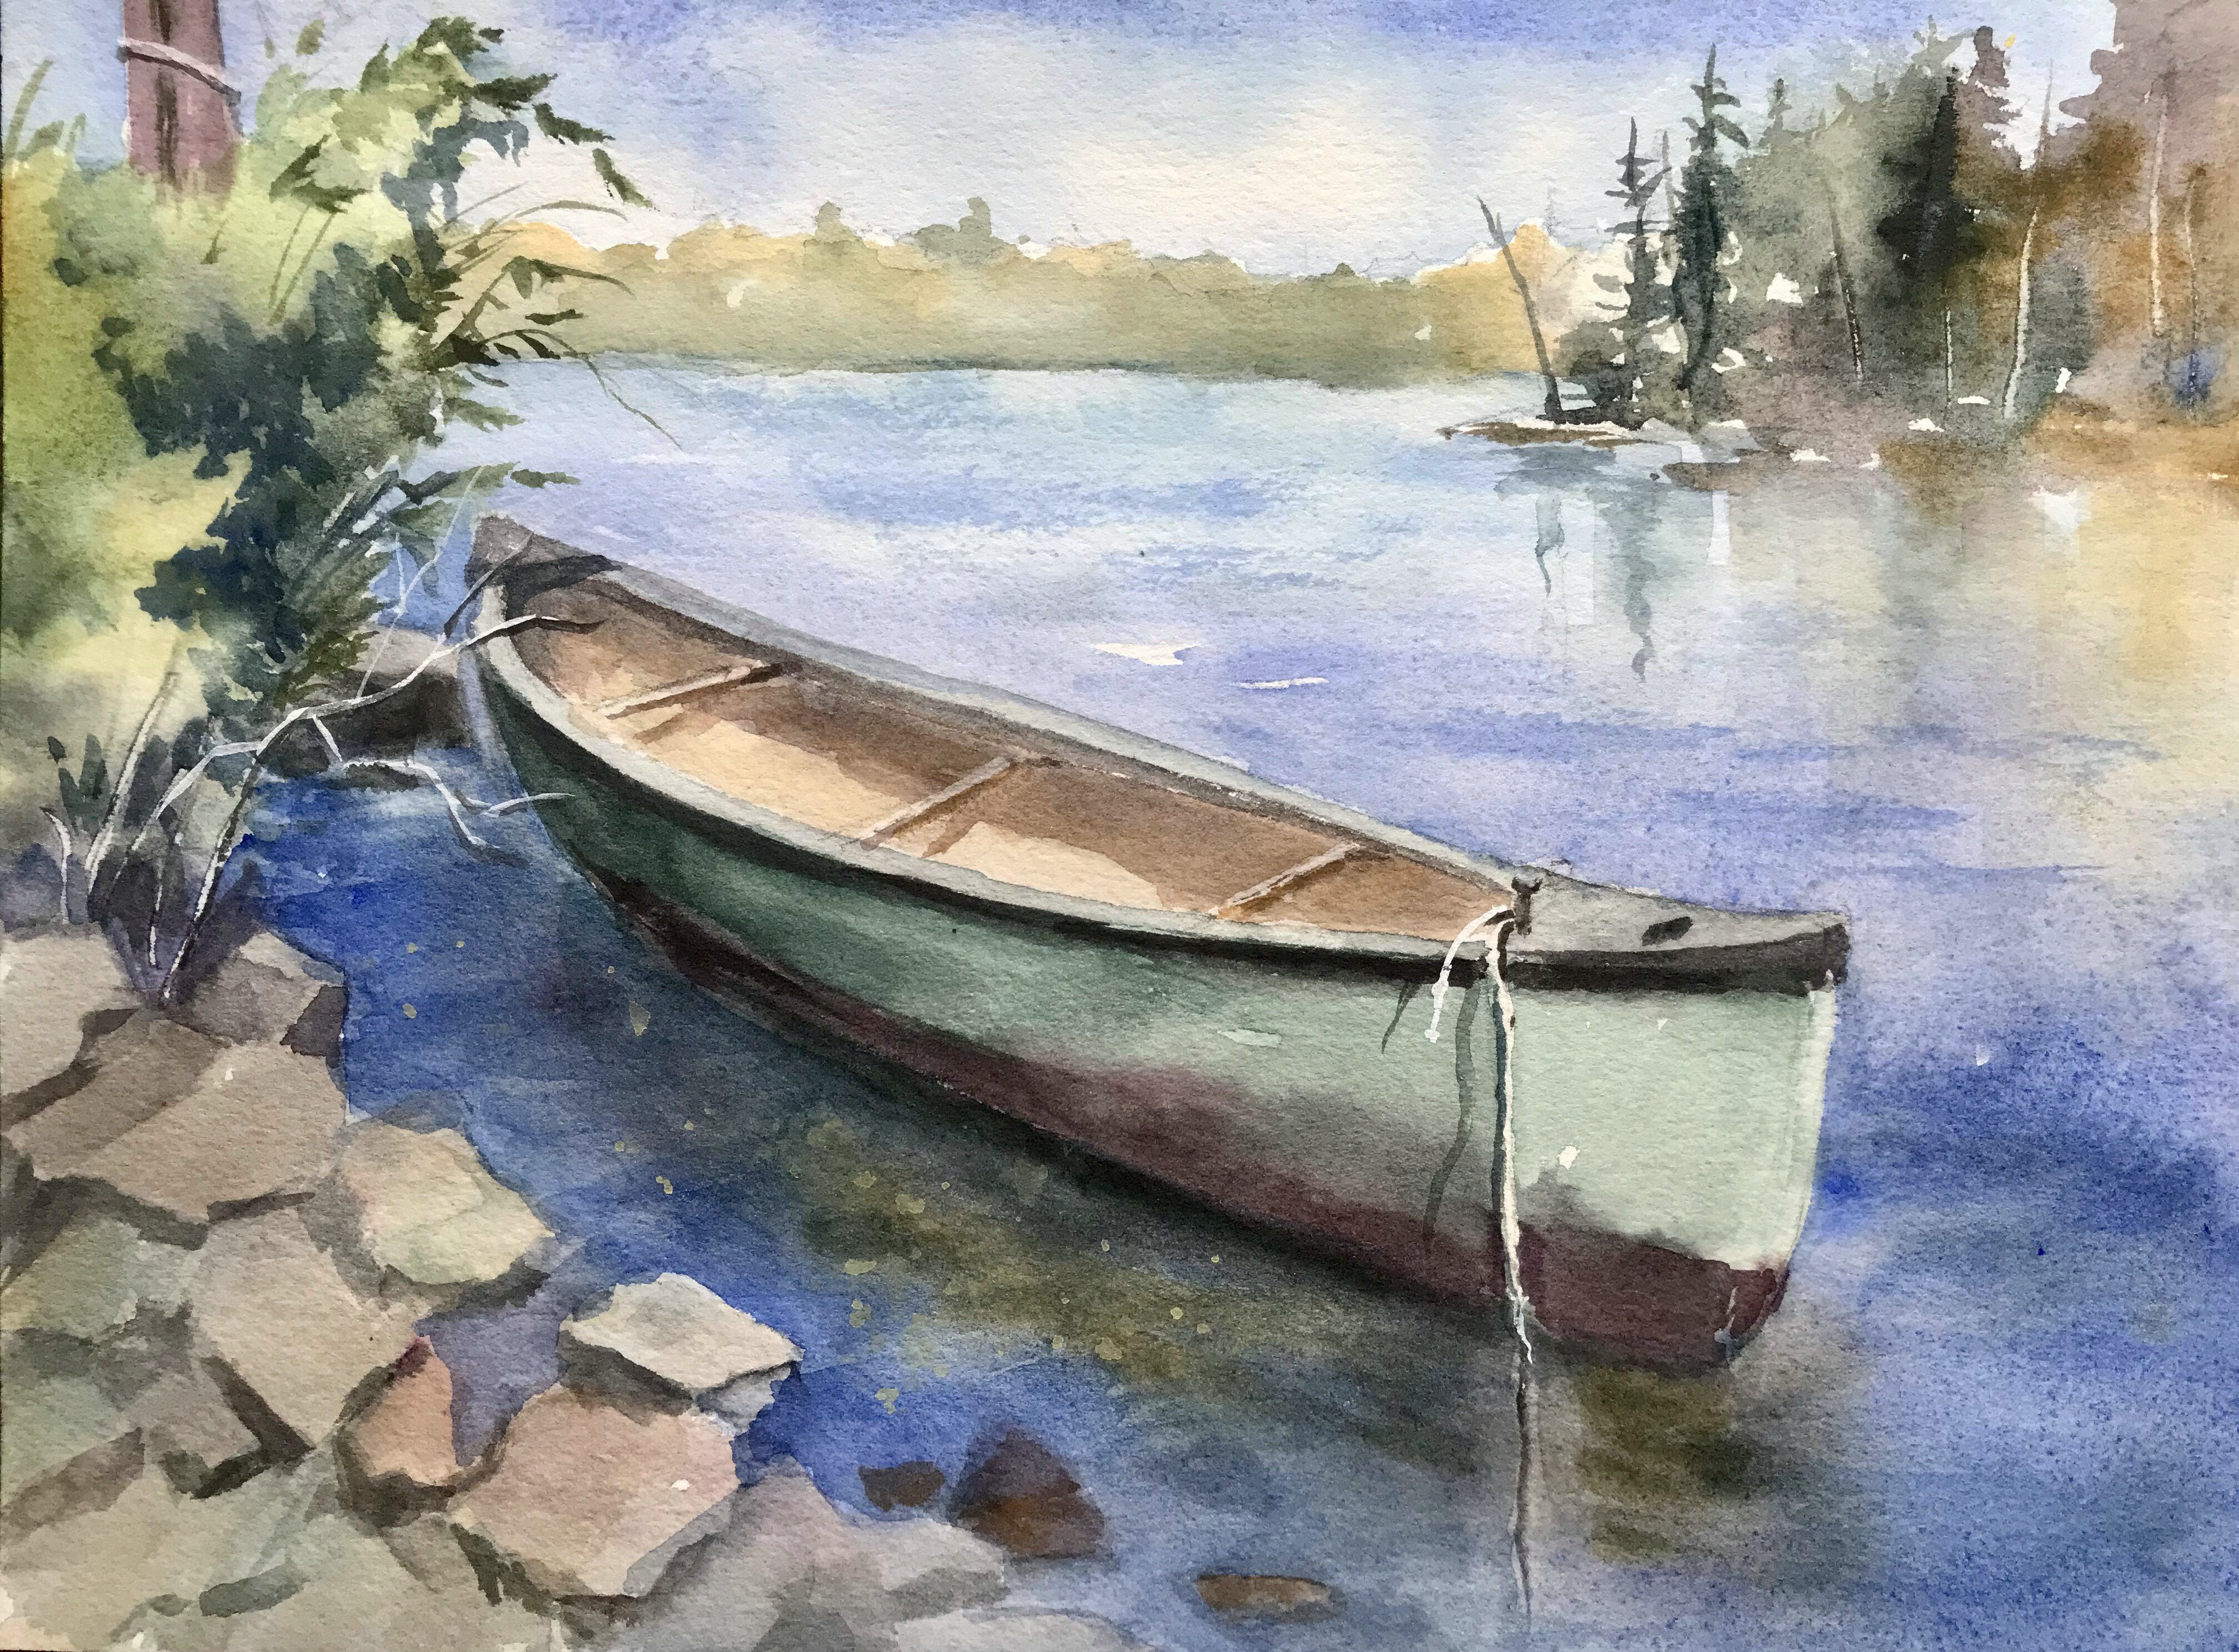 "Canoe" by Susan Sterber